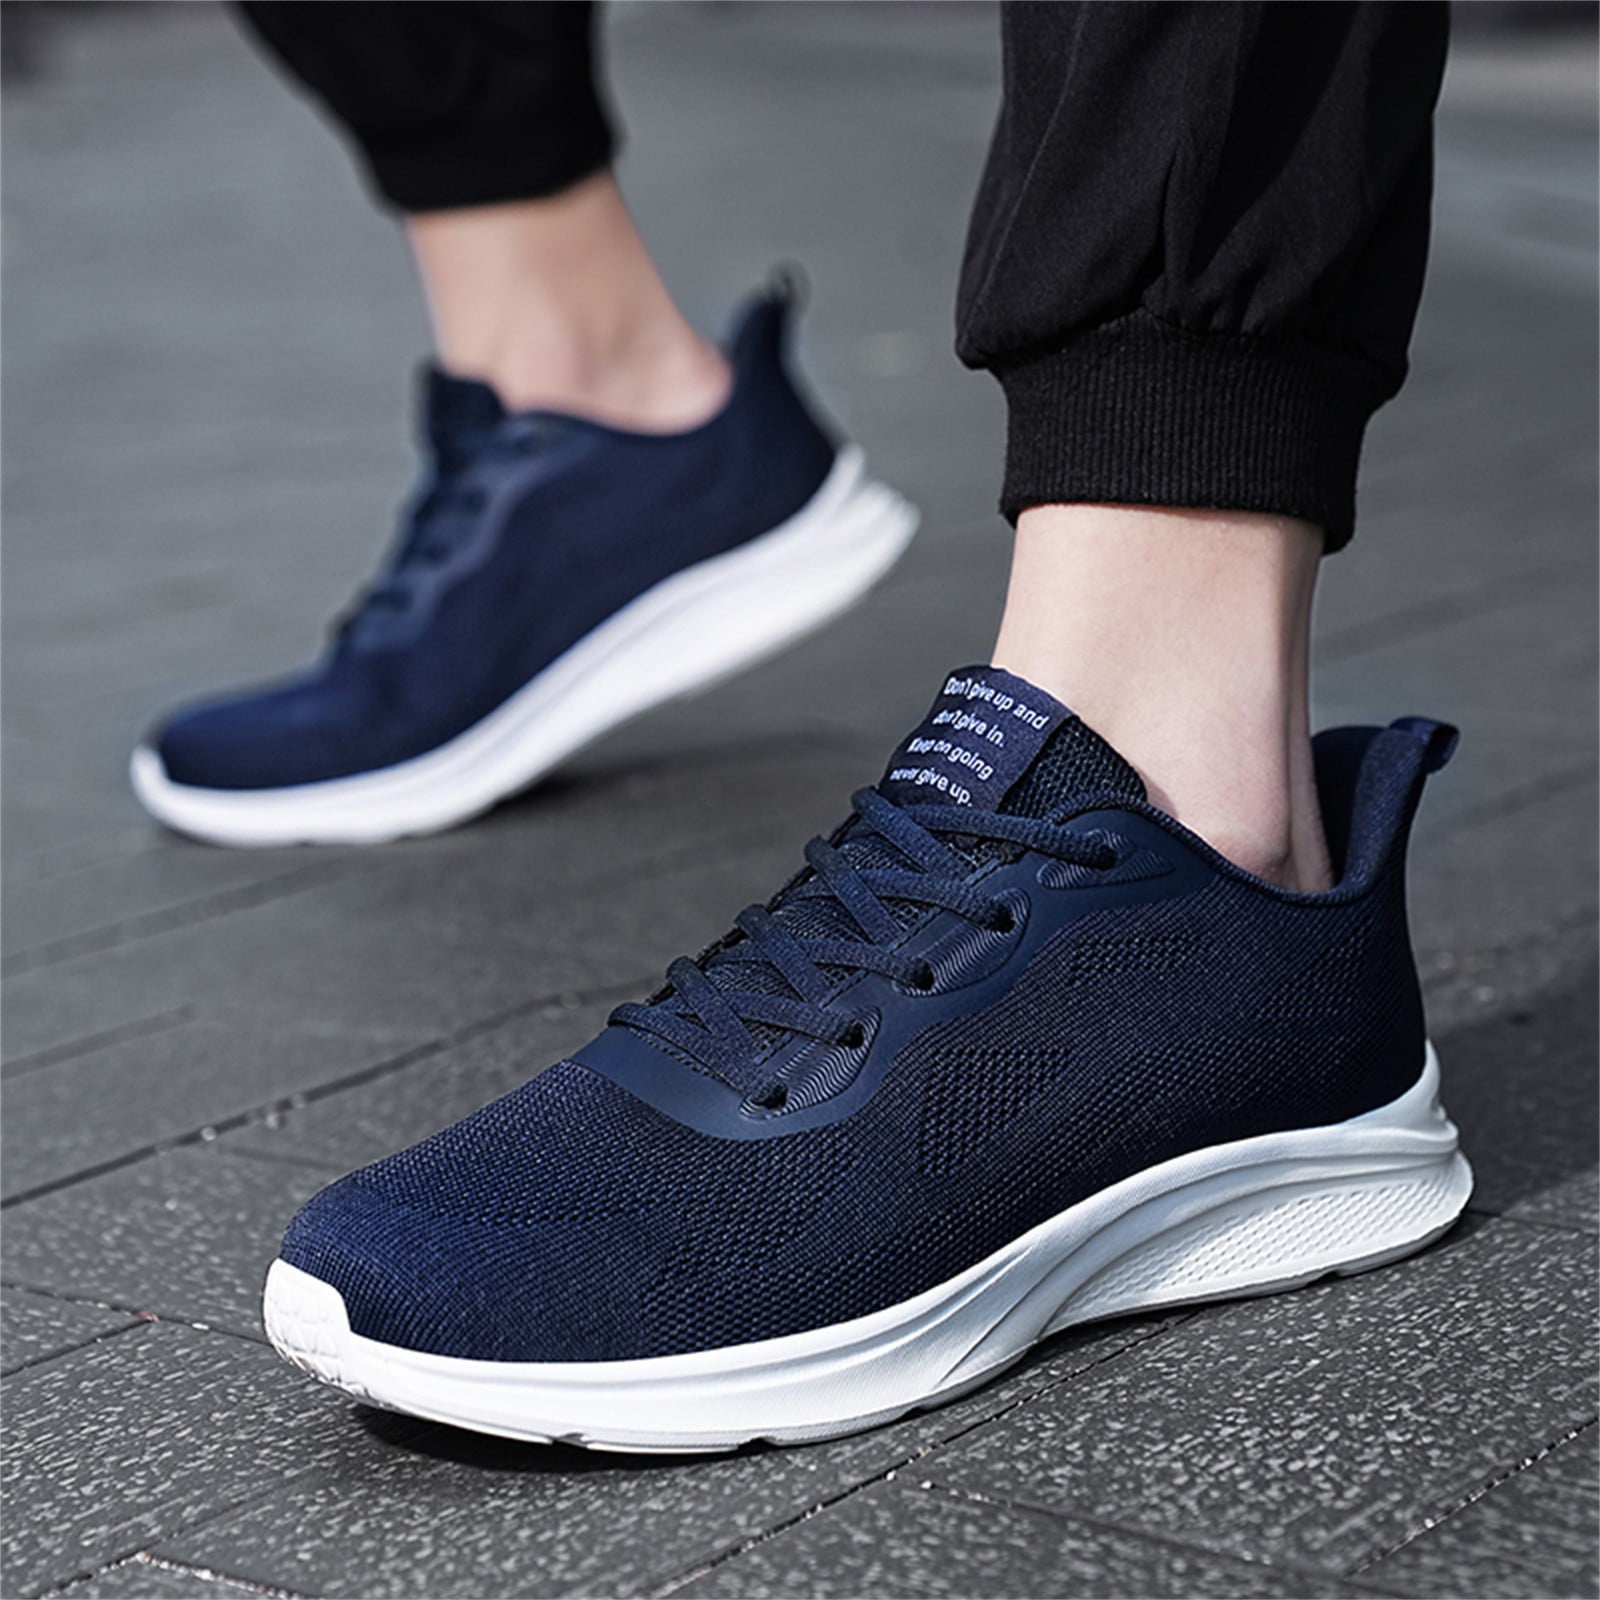 Ocean + Coast Solid Blue Sneakers Size 9 - 56% off | ThredUp